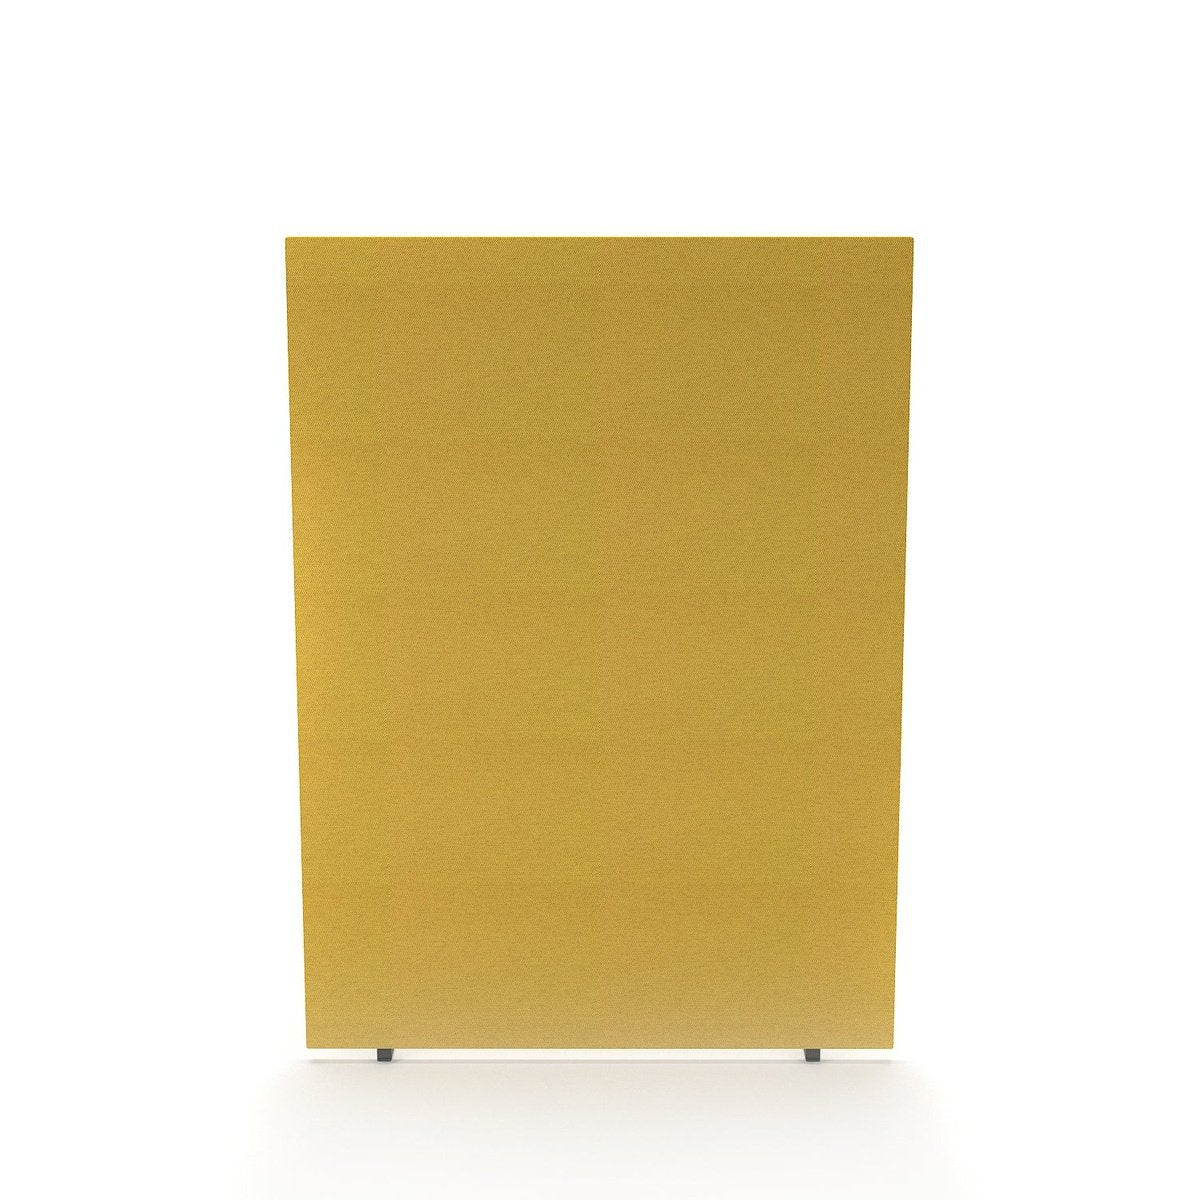 Impulse Plus Free Standing Floor Screen - 1200mm High, MDF & Acrylic, Oblong Shape, Multiple Widths, 3-Year Guarantee